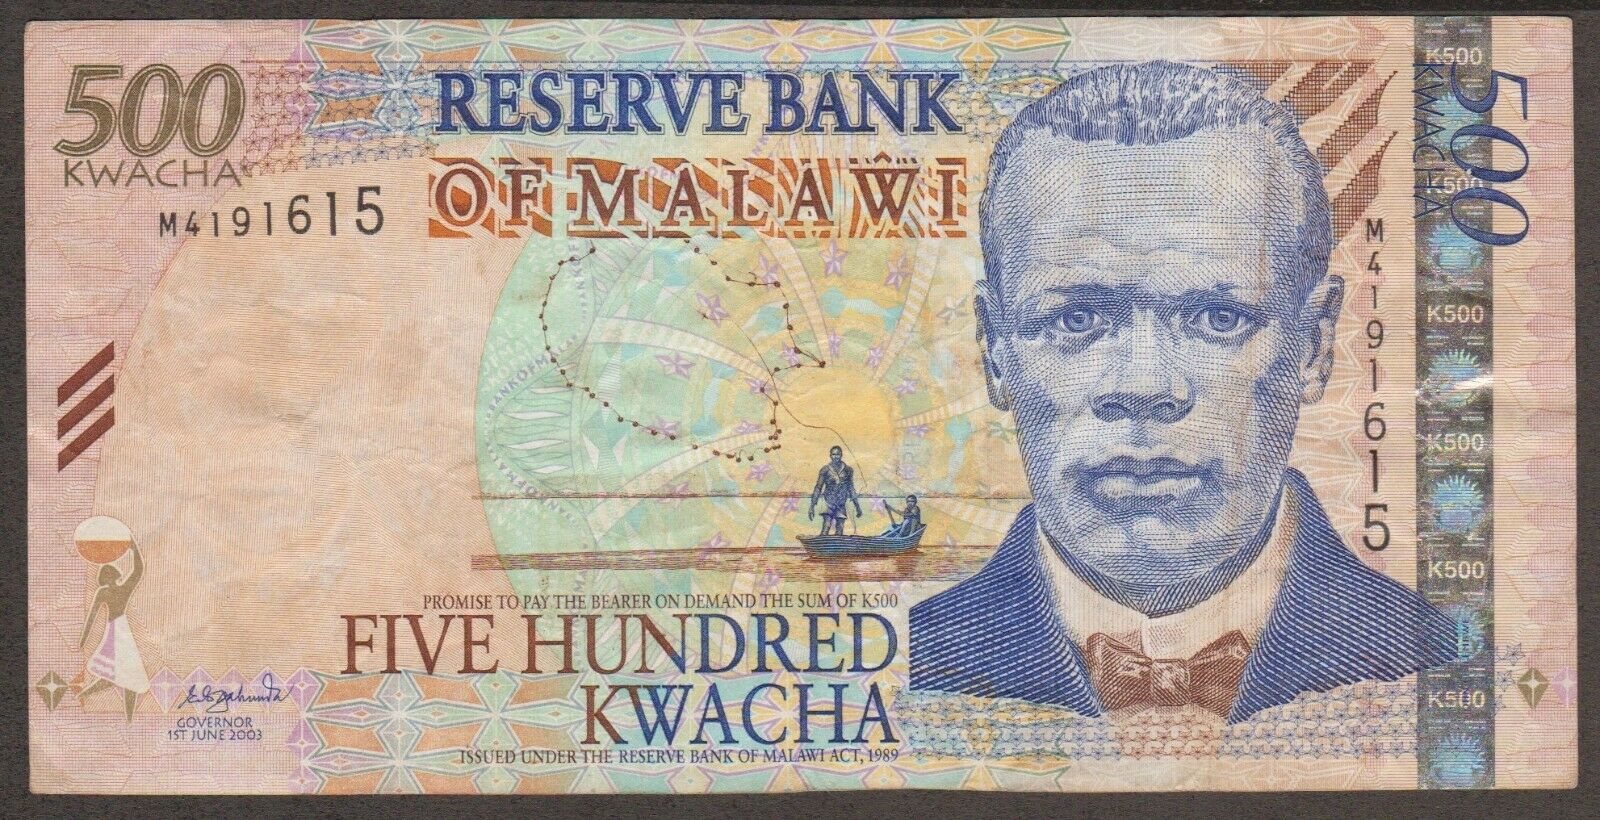 Malawi Banknote - 500 Kwacha - 2003 Issue - Pick # 48 - Rare